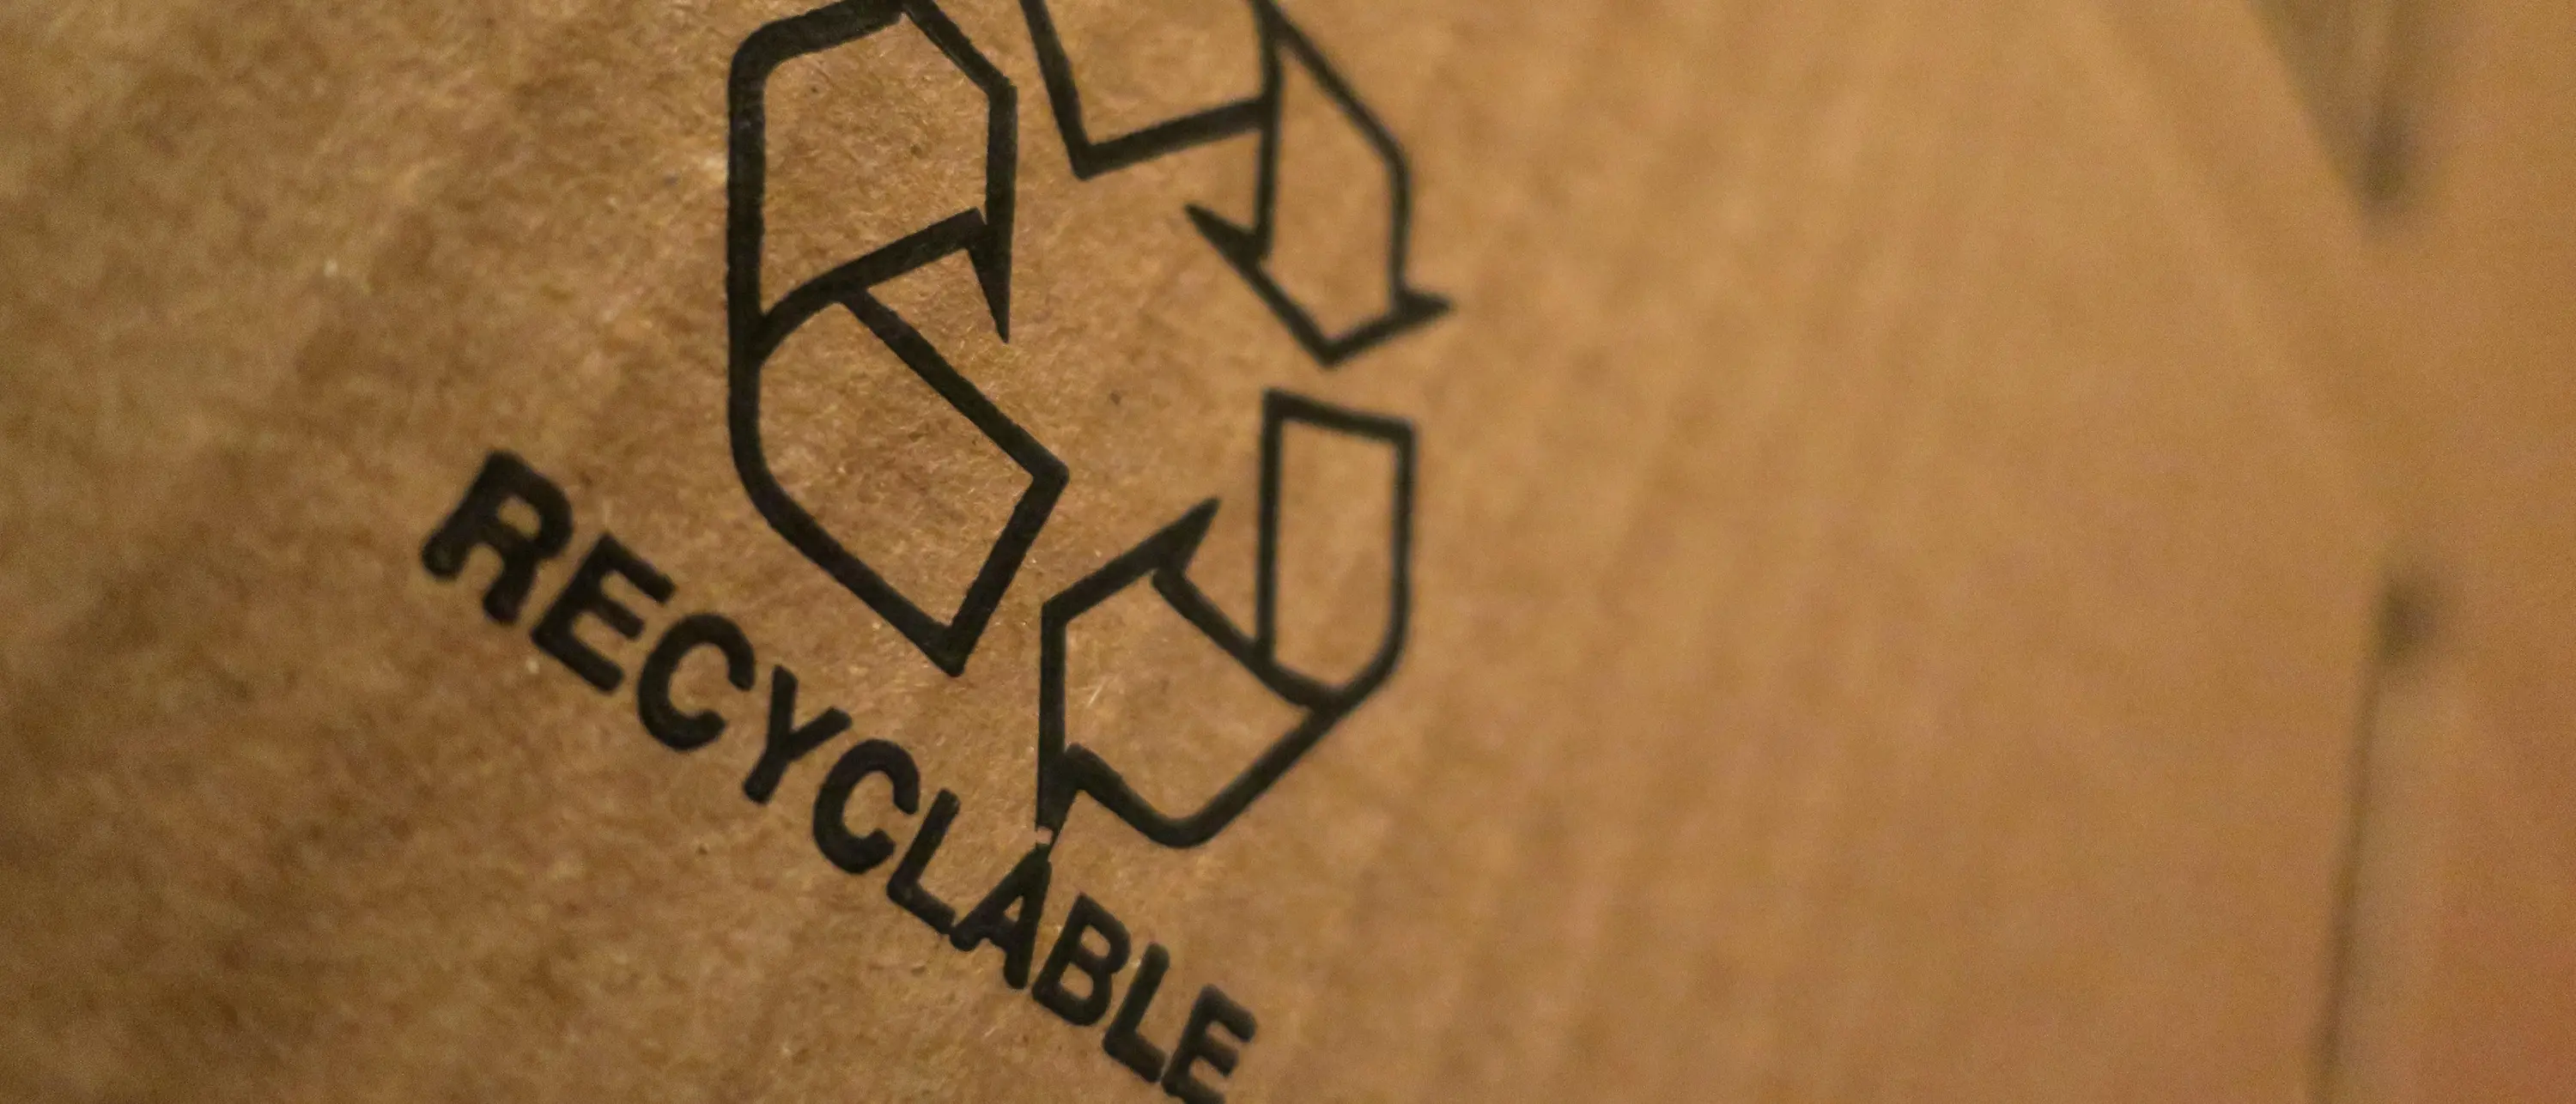 Karton mit aufgedrucktem Recyclingsymbol